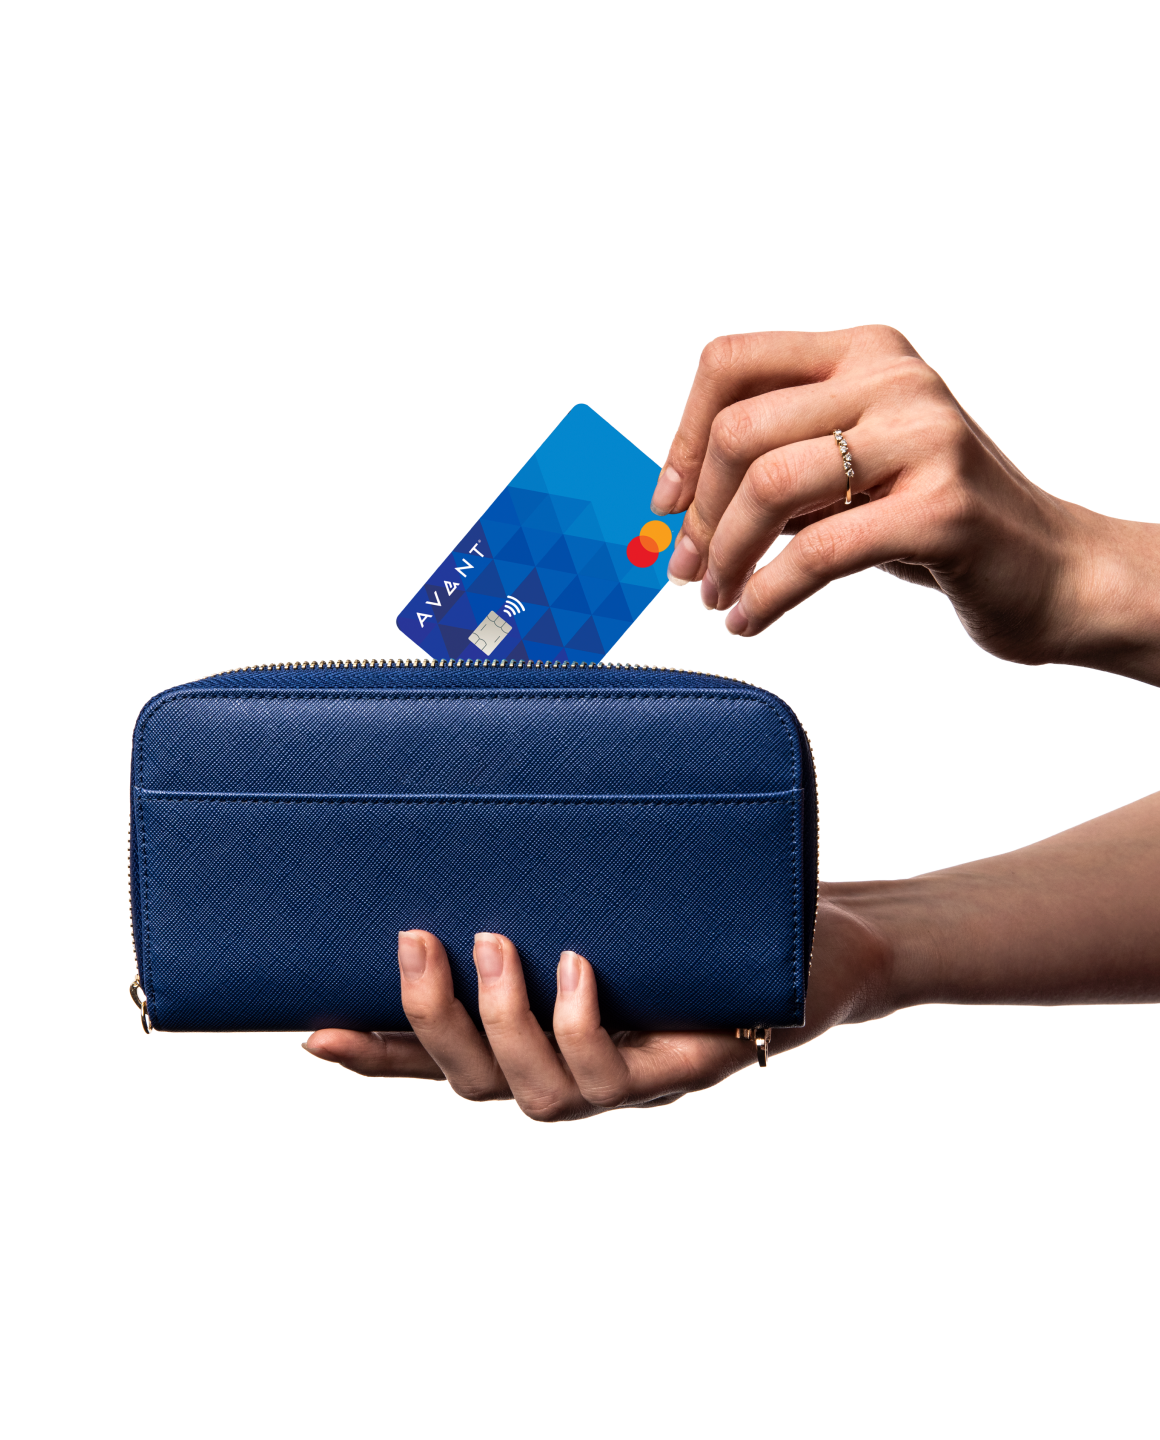 Mini Transparent Nylon Mesh Card Bag Credit Card Organizer